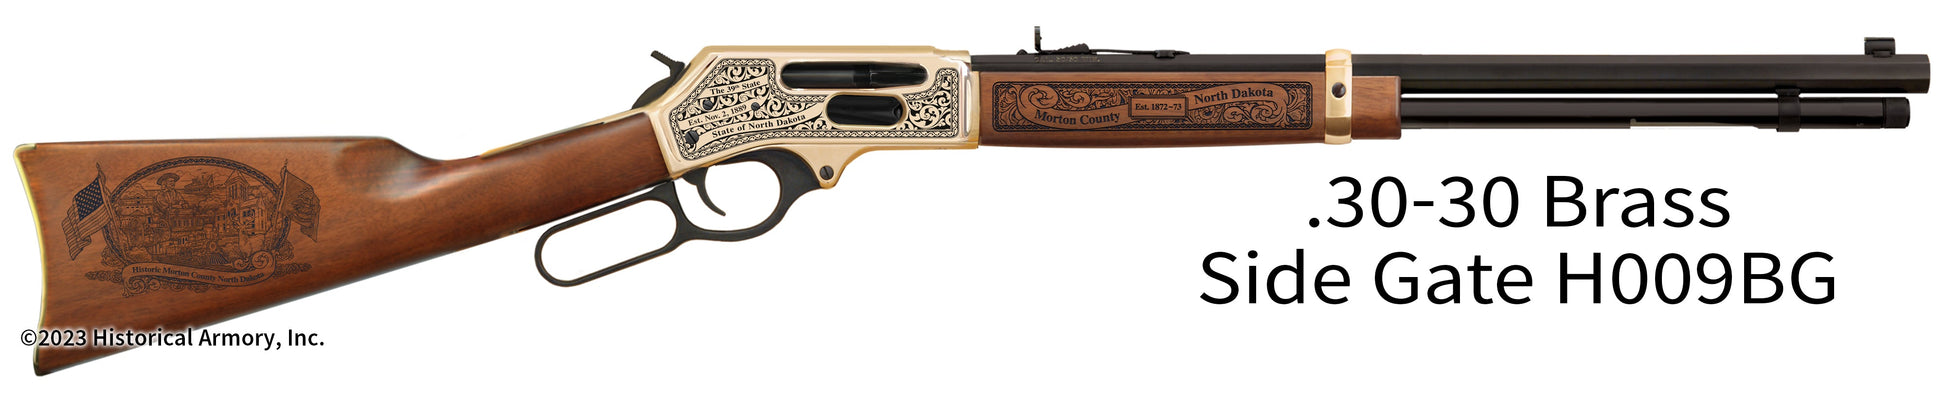 Morton County North Dakota Engraved Henry .30-30 Brass Side Gate Rifle